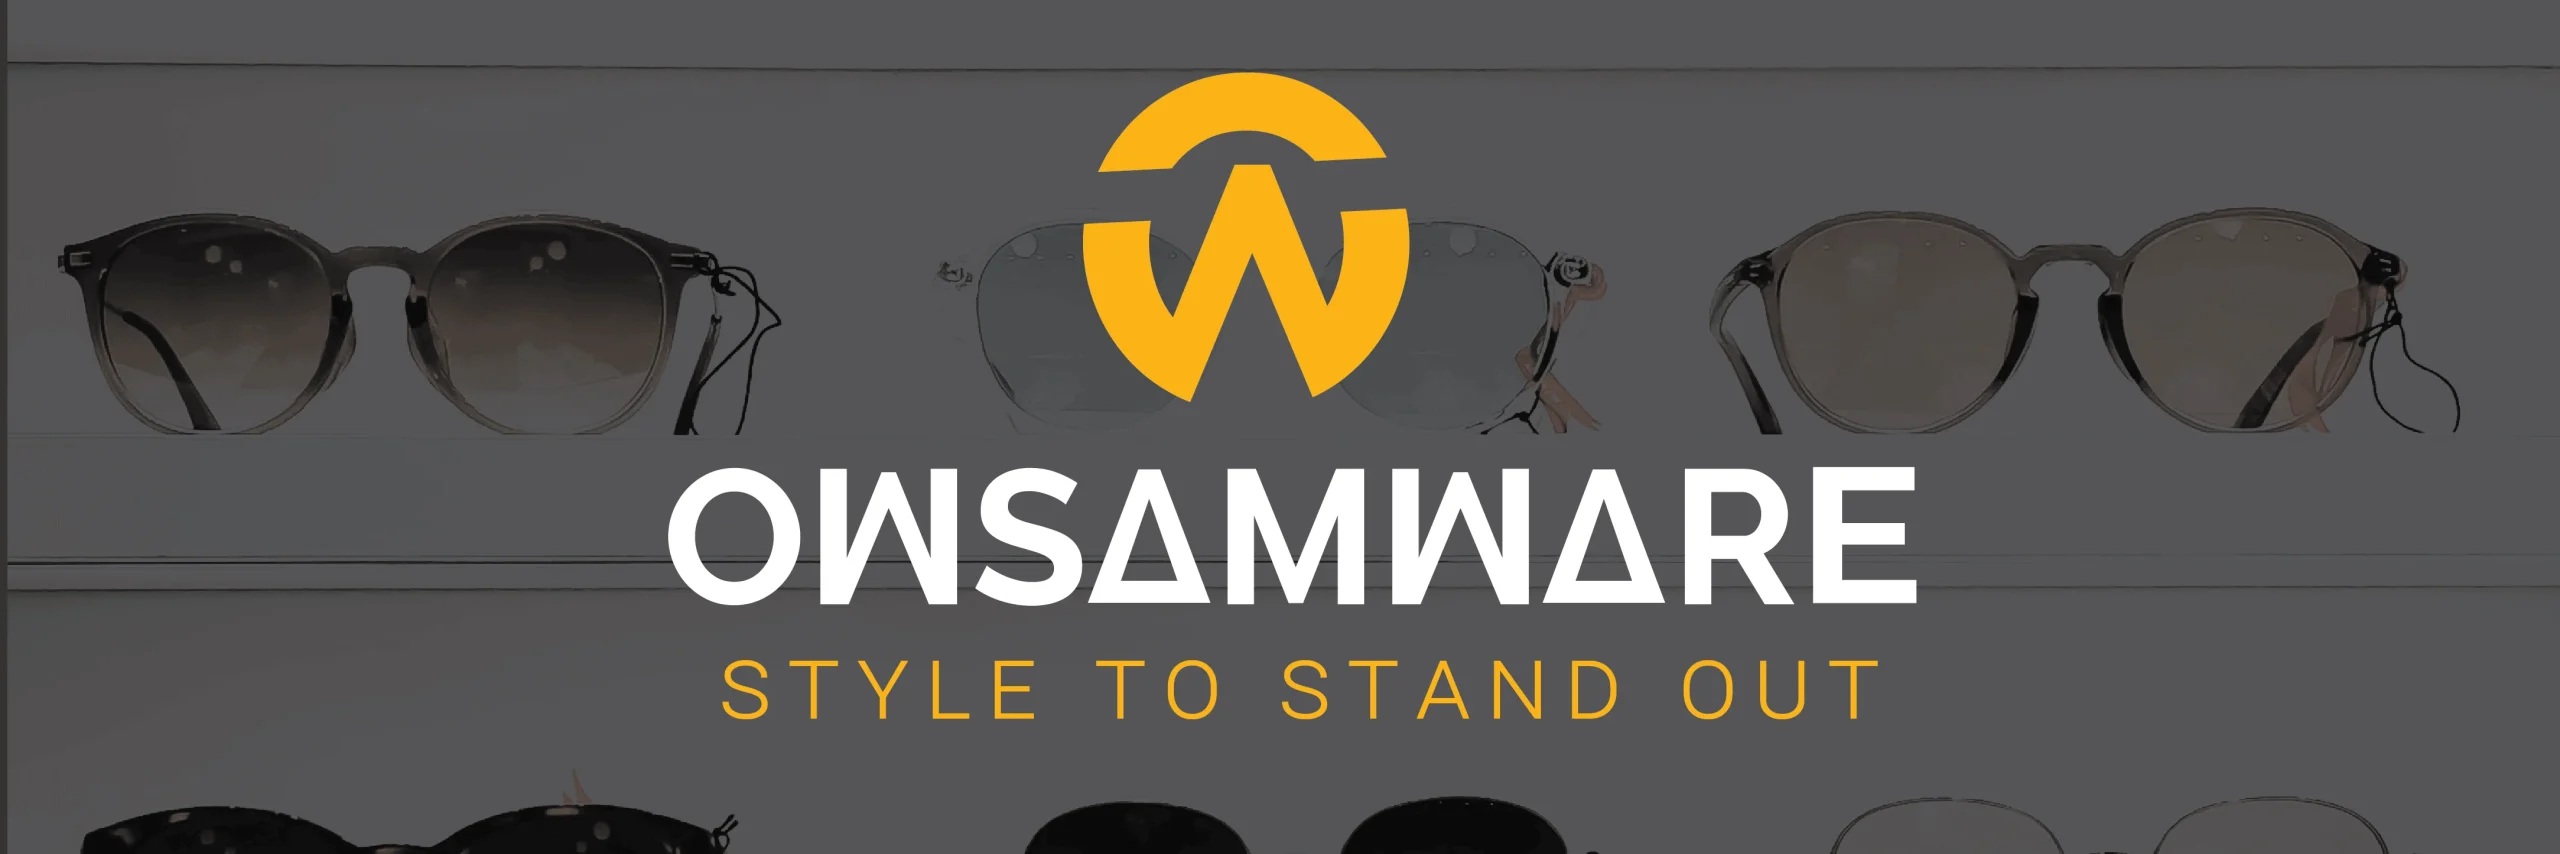 owsameware logo mockeup